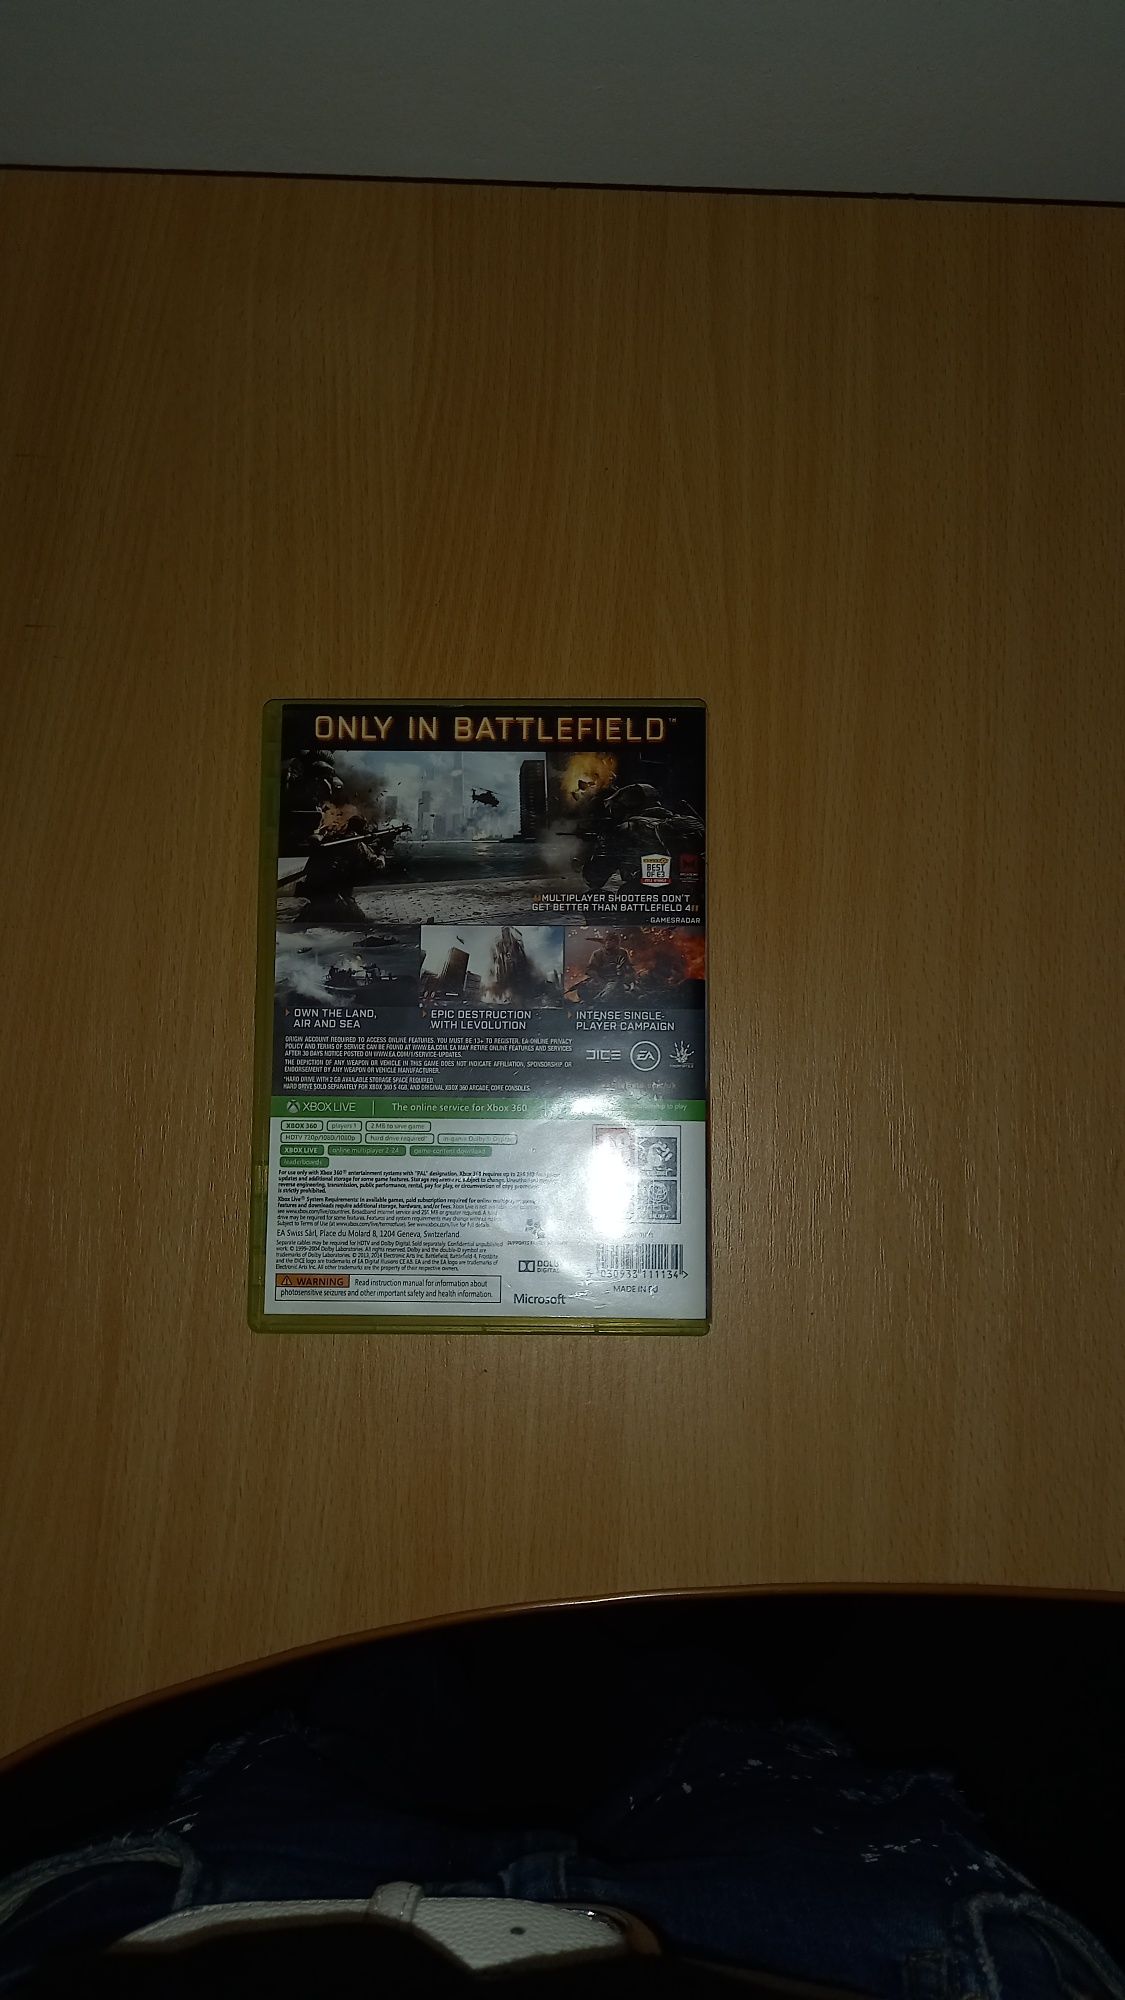 Battlefield 4 XBOX360